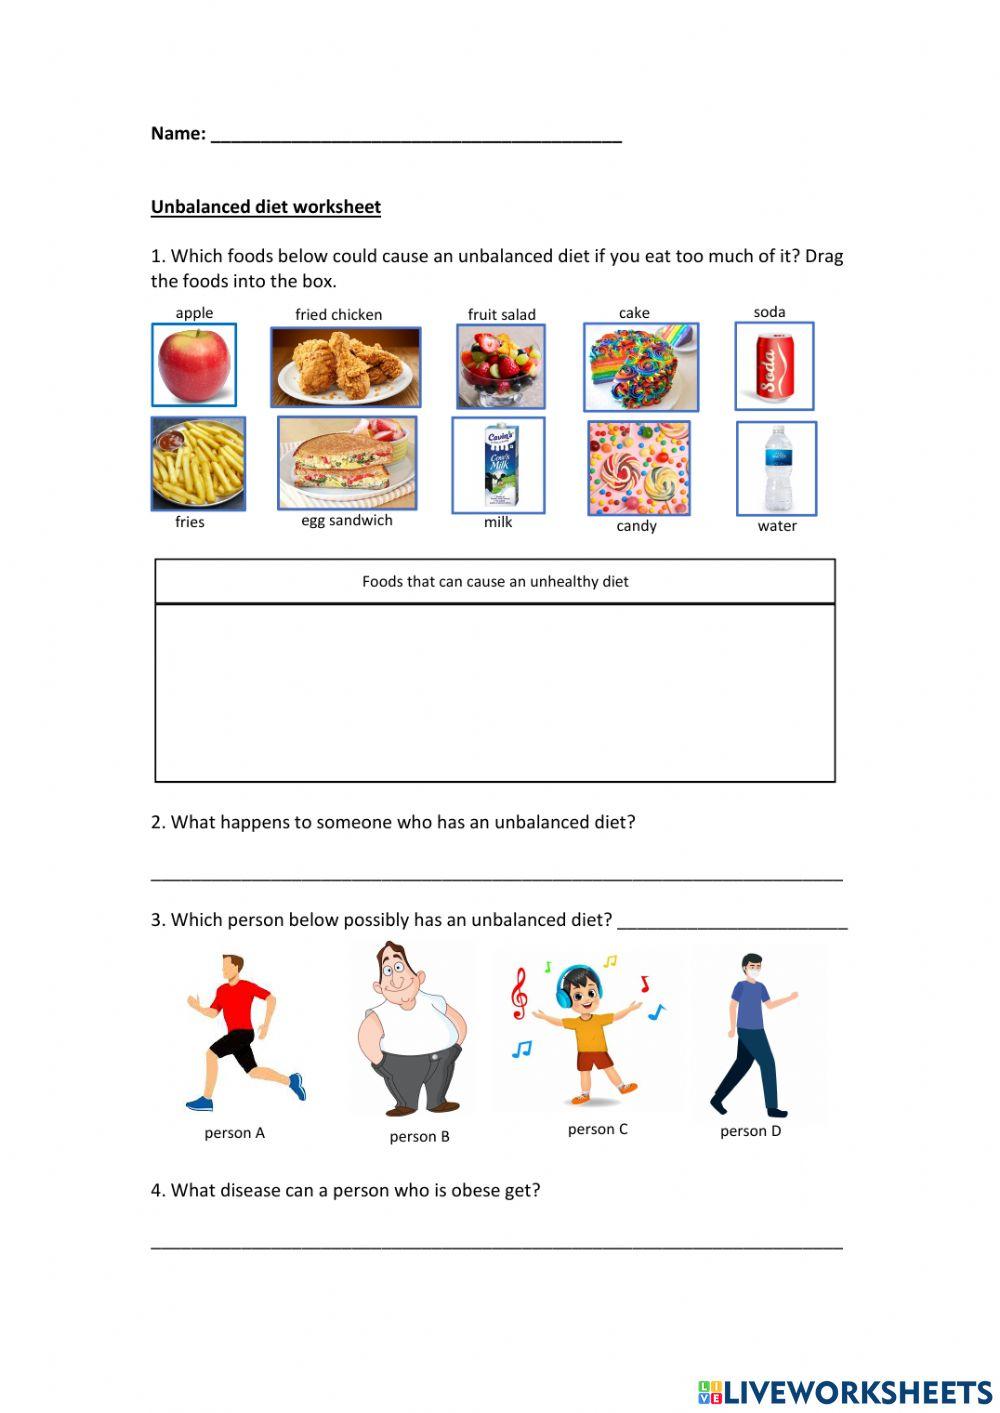 Unbalanced diet worksheet